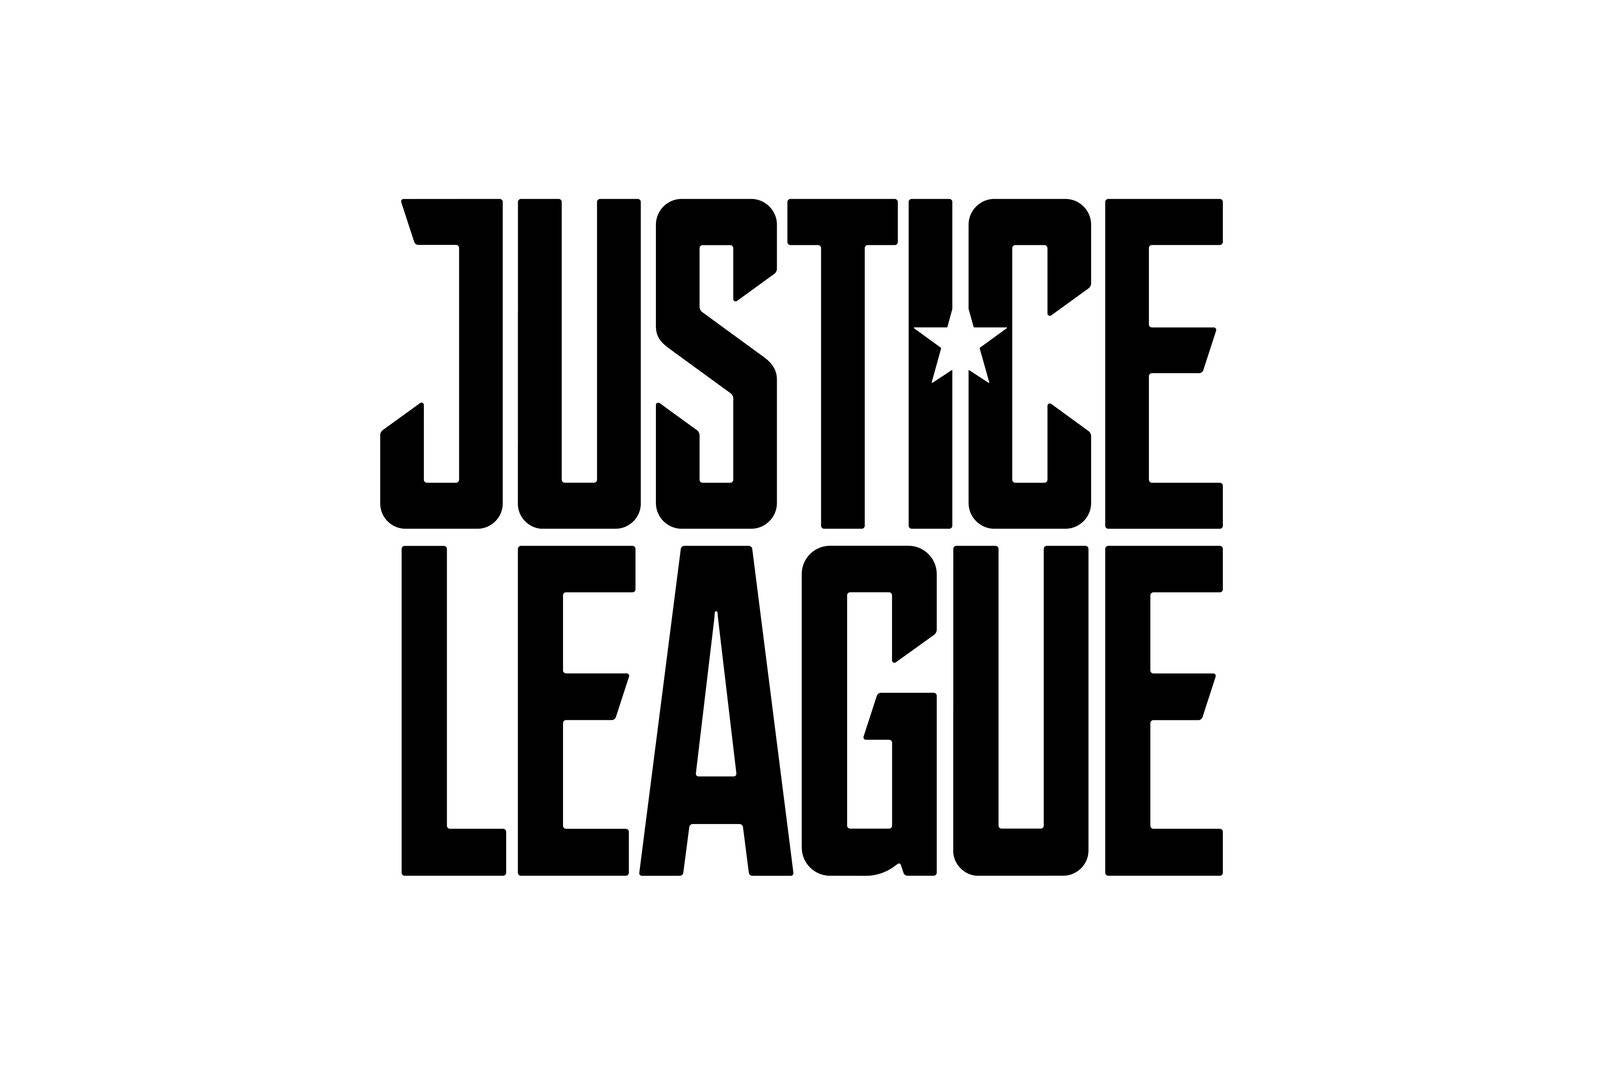 Justice League Font Free Download